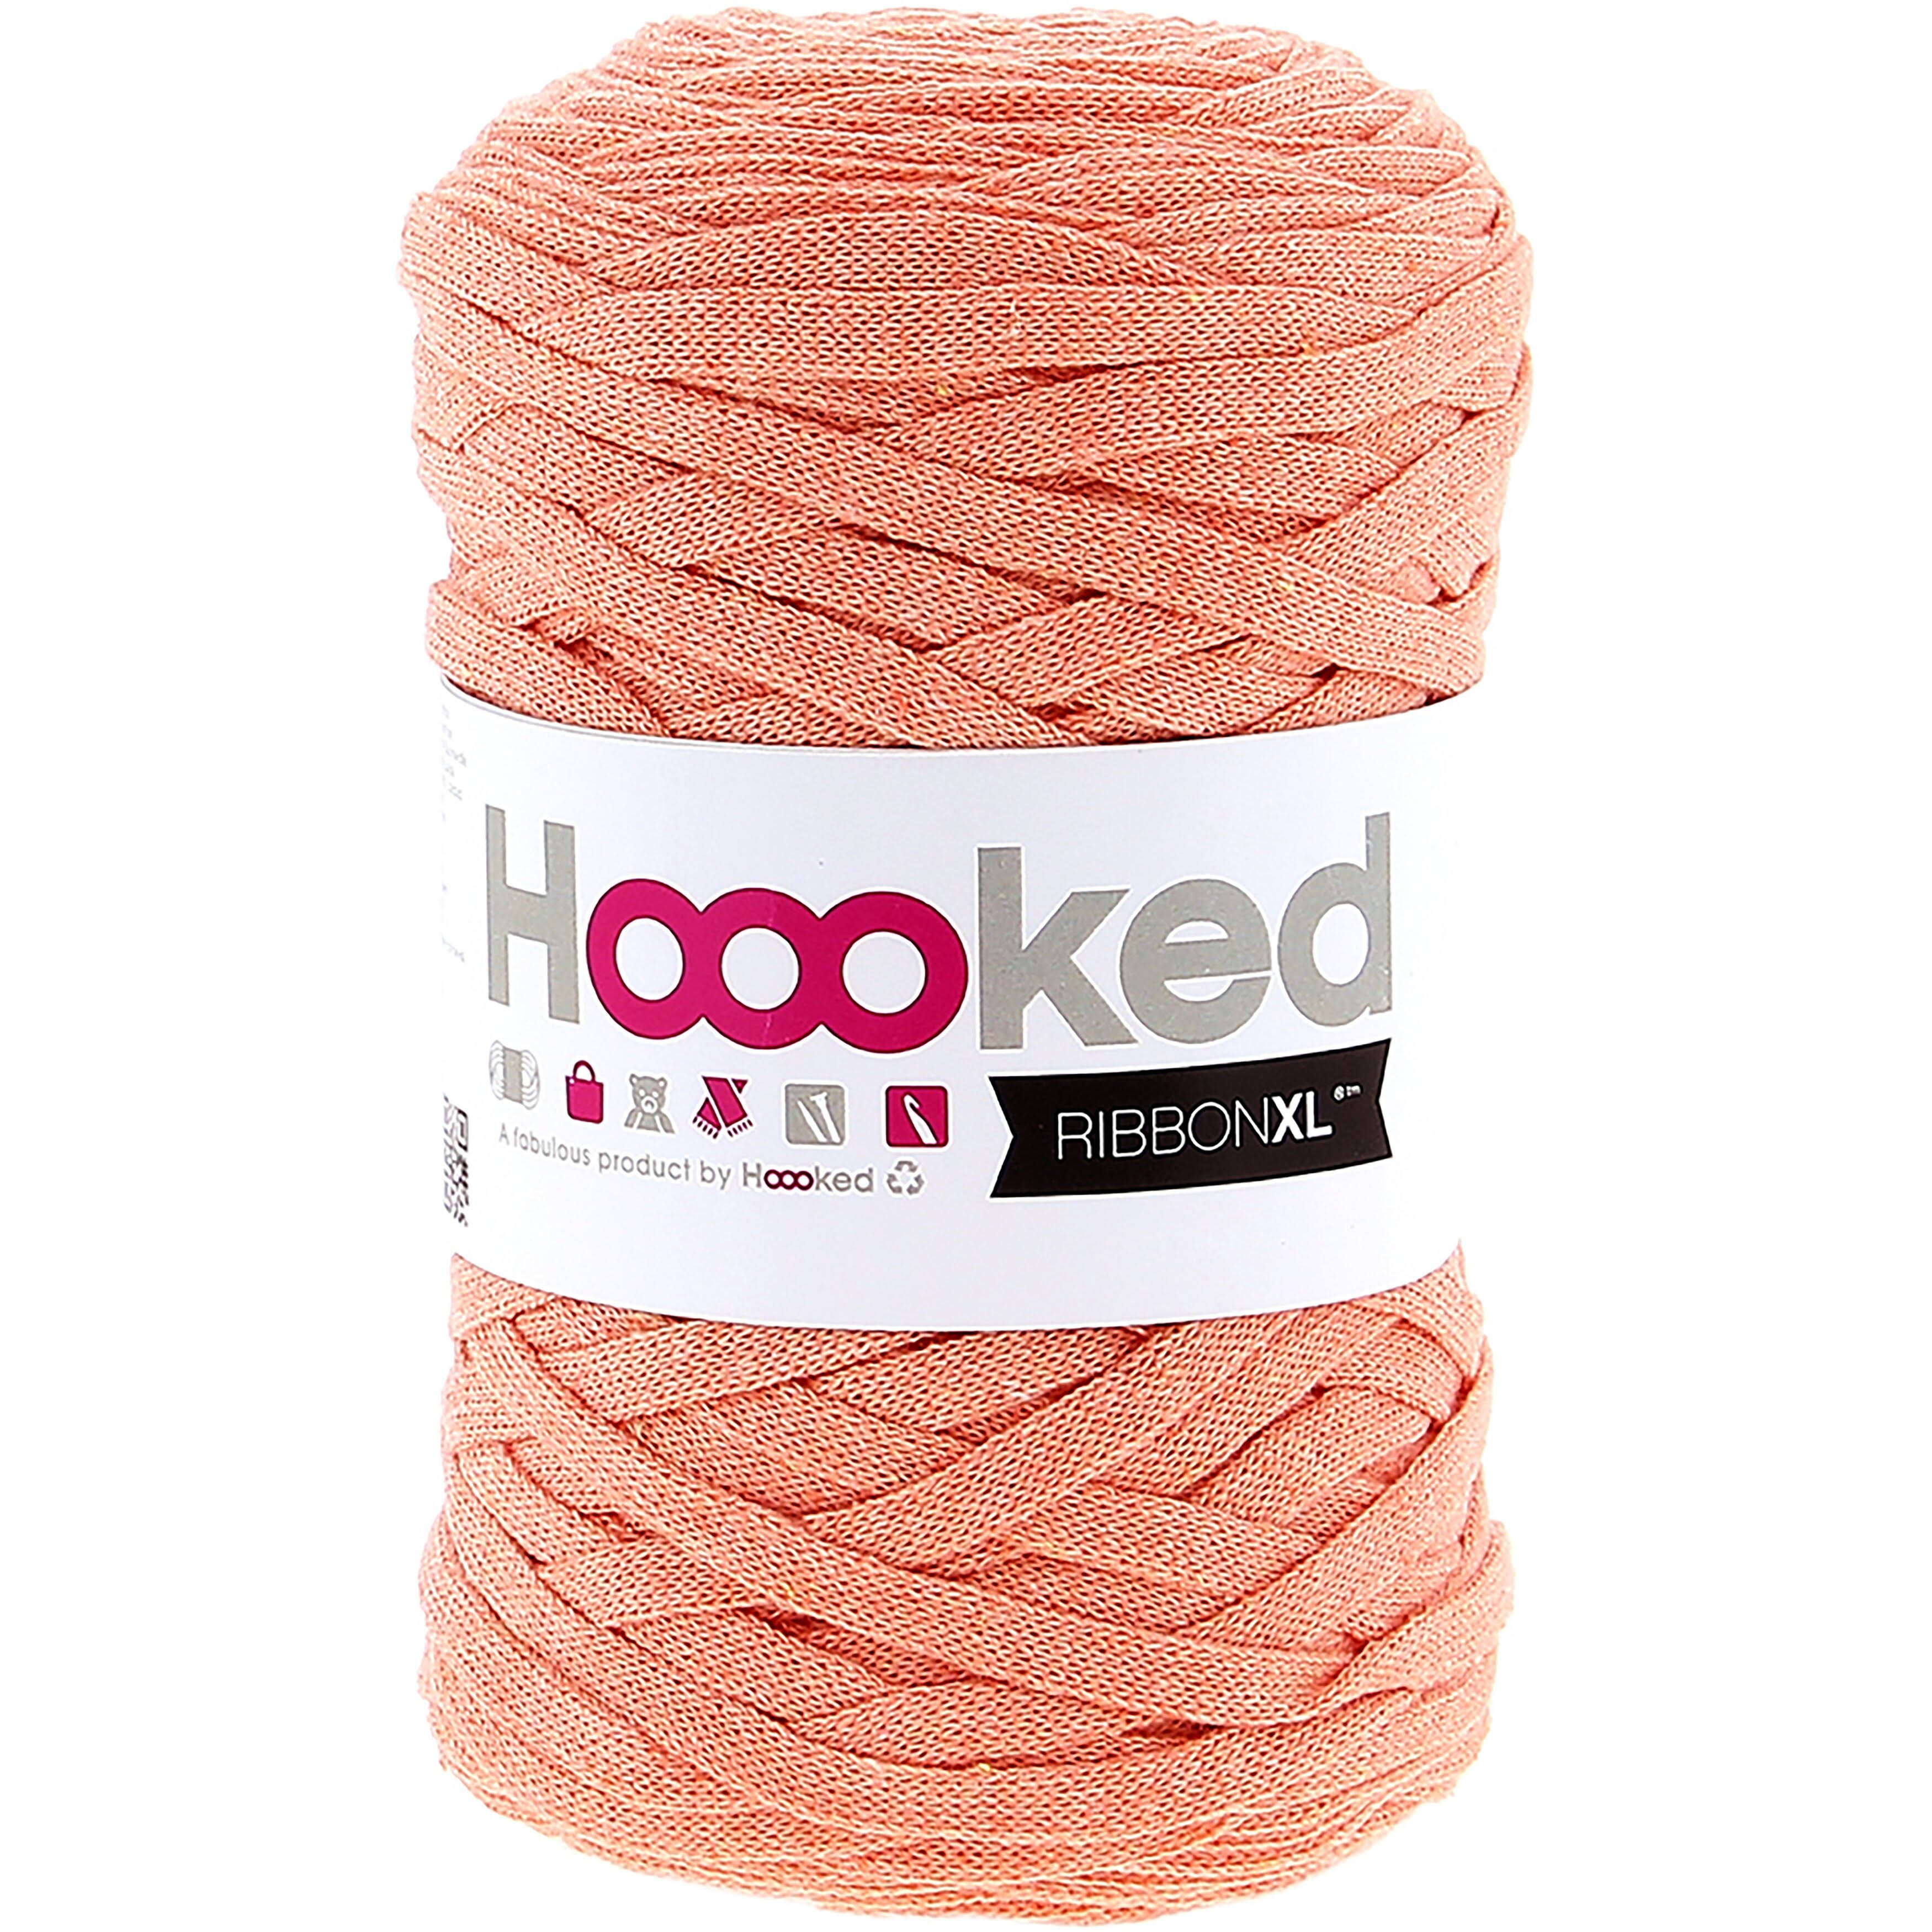 Hoooked Ribbon XL Yarn-Iced Apricot